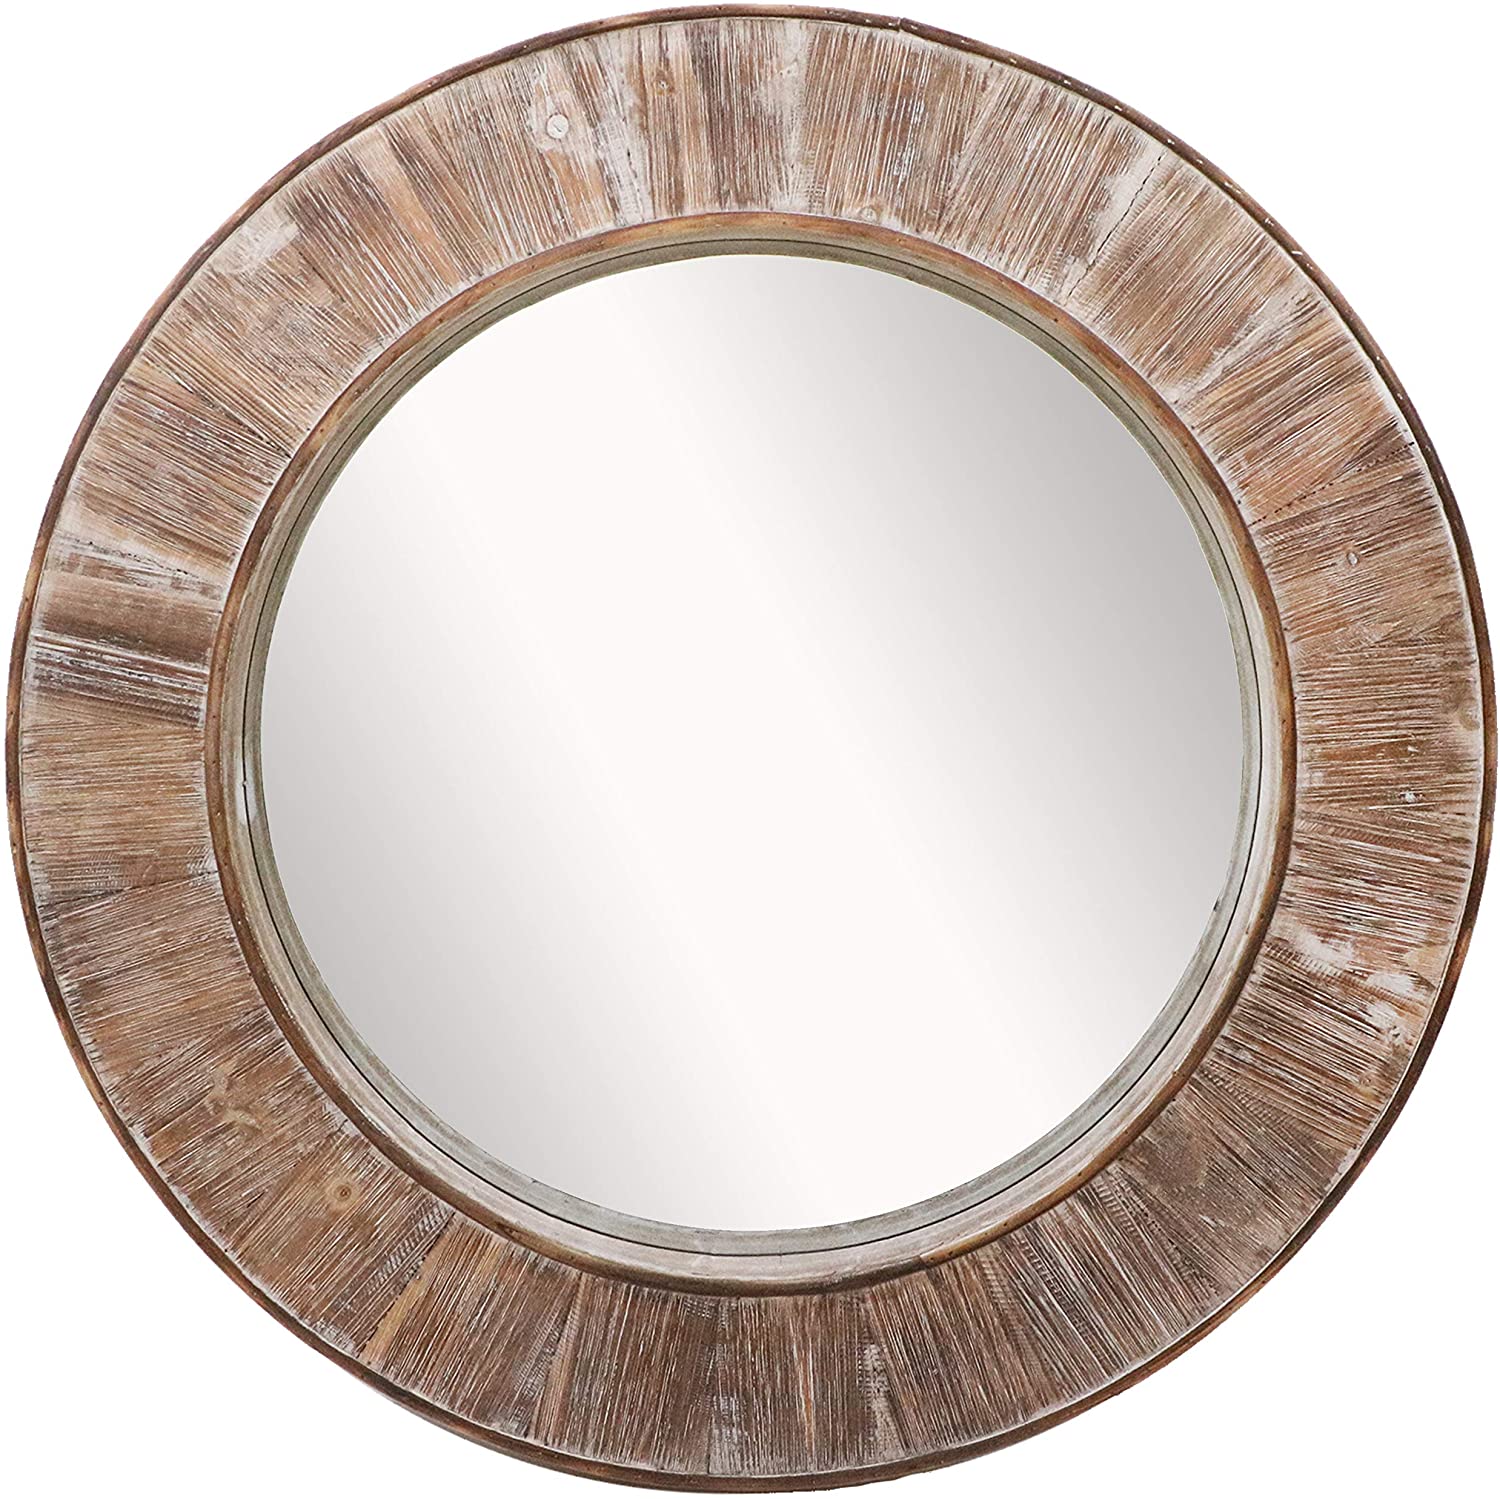 Barnyard-Designs-Round-Decorative-Wall-Hanging-Mirror-Large-Wooden